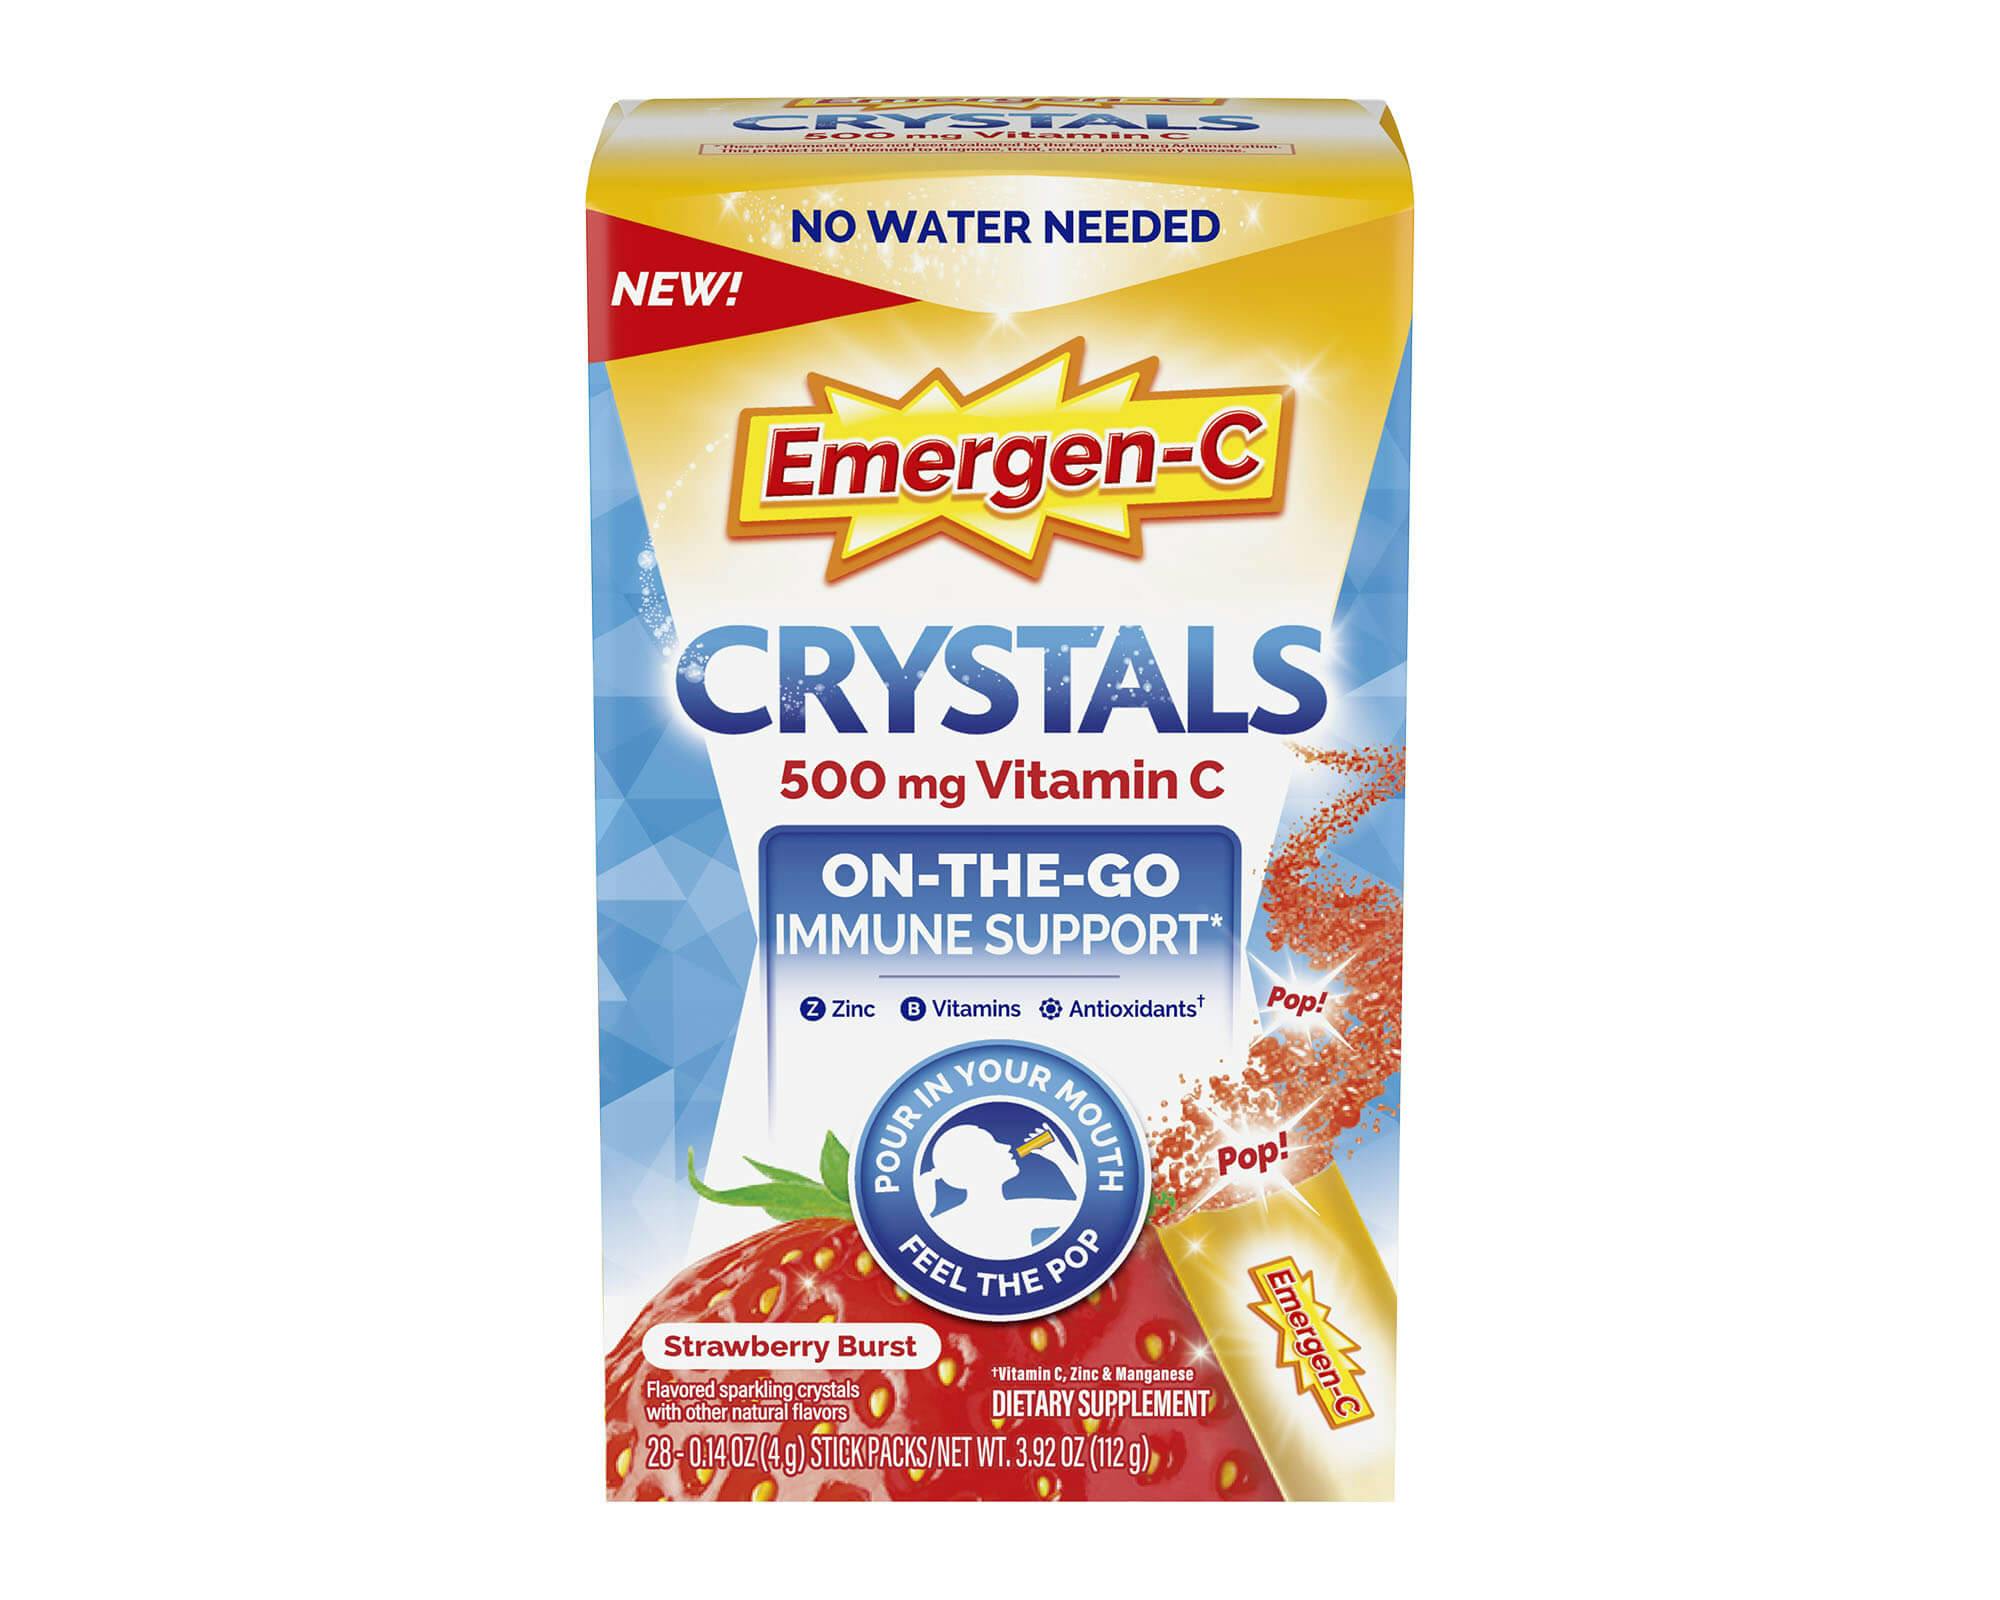 Emergen-C Crystals Strawberry Burst product